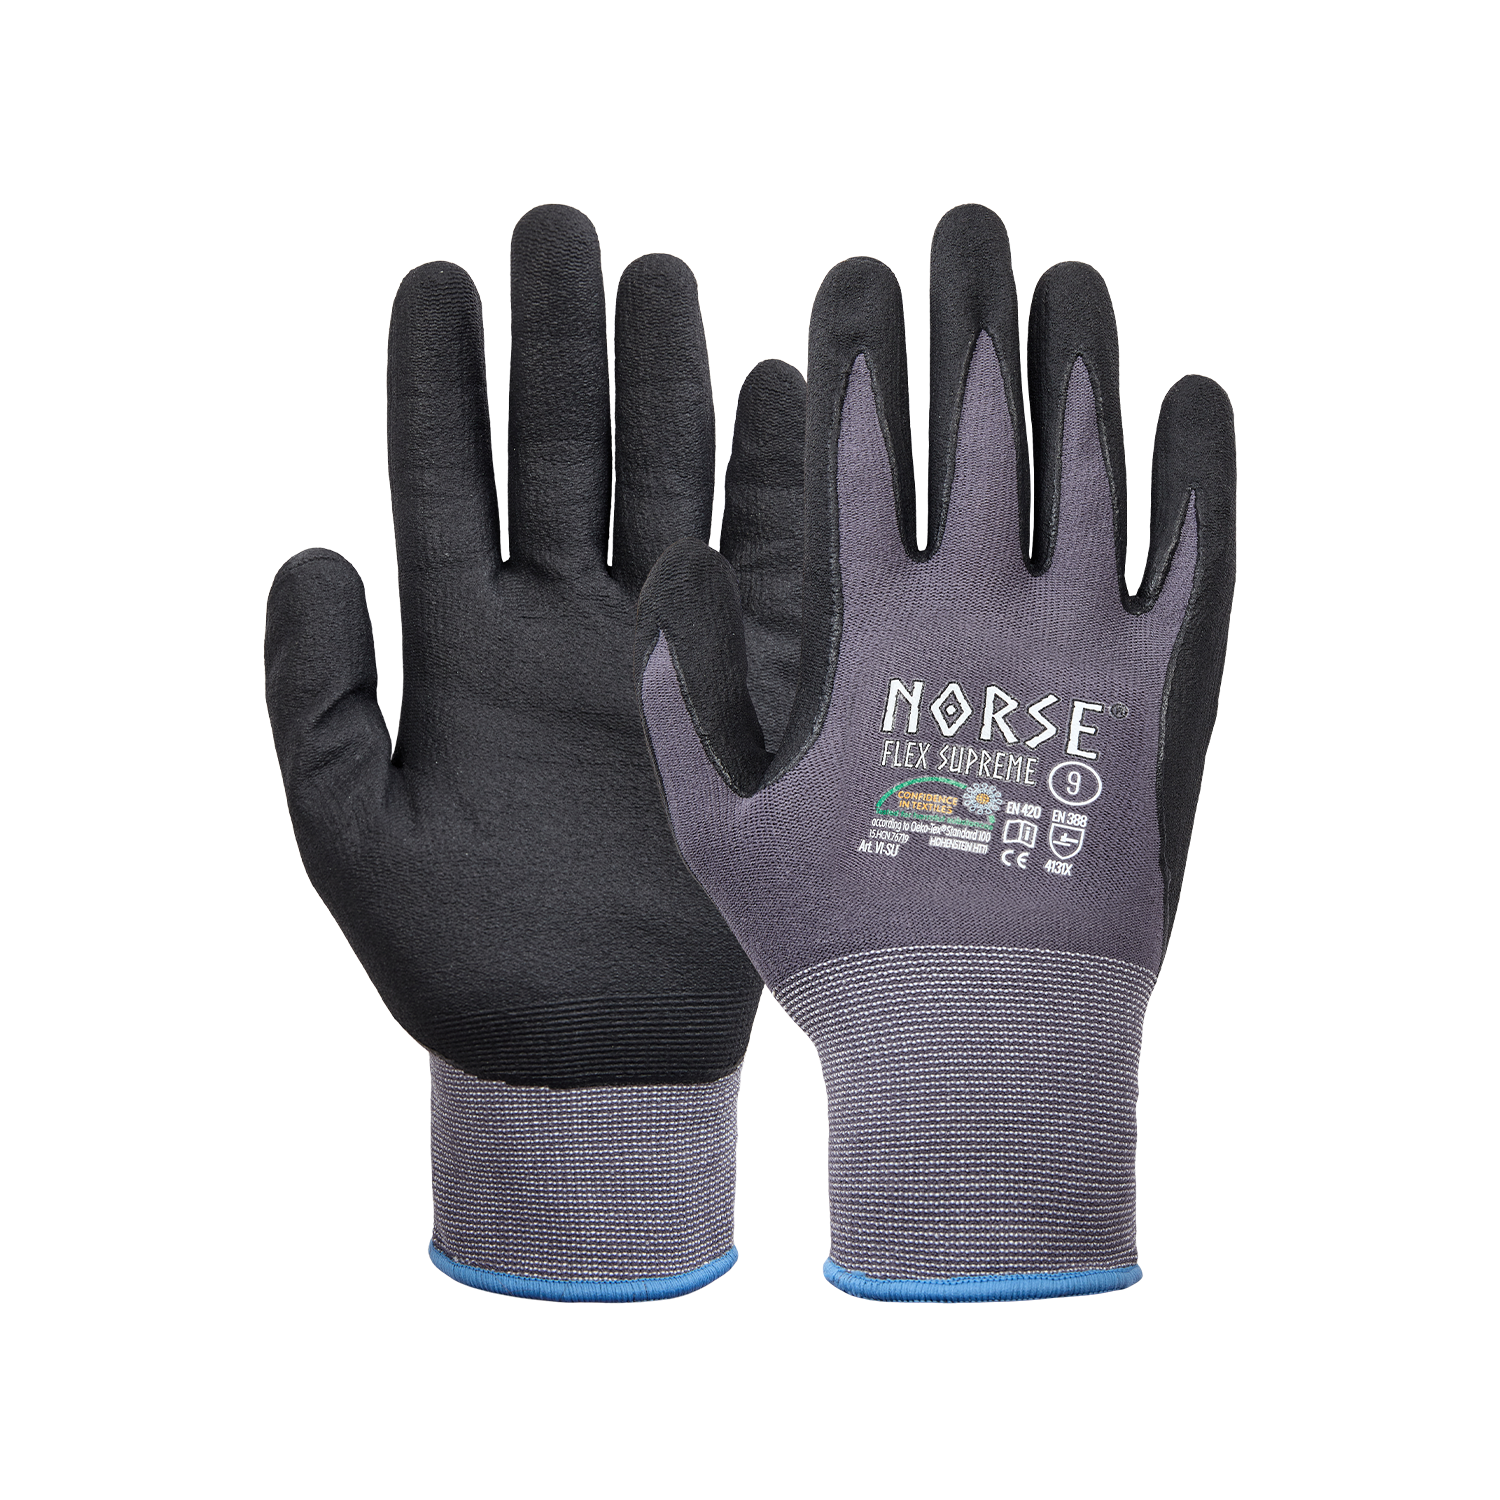 NORSE Flex Supreme assembly gloves size 7